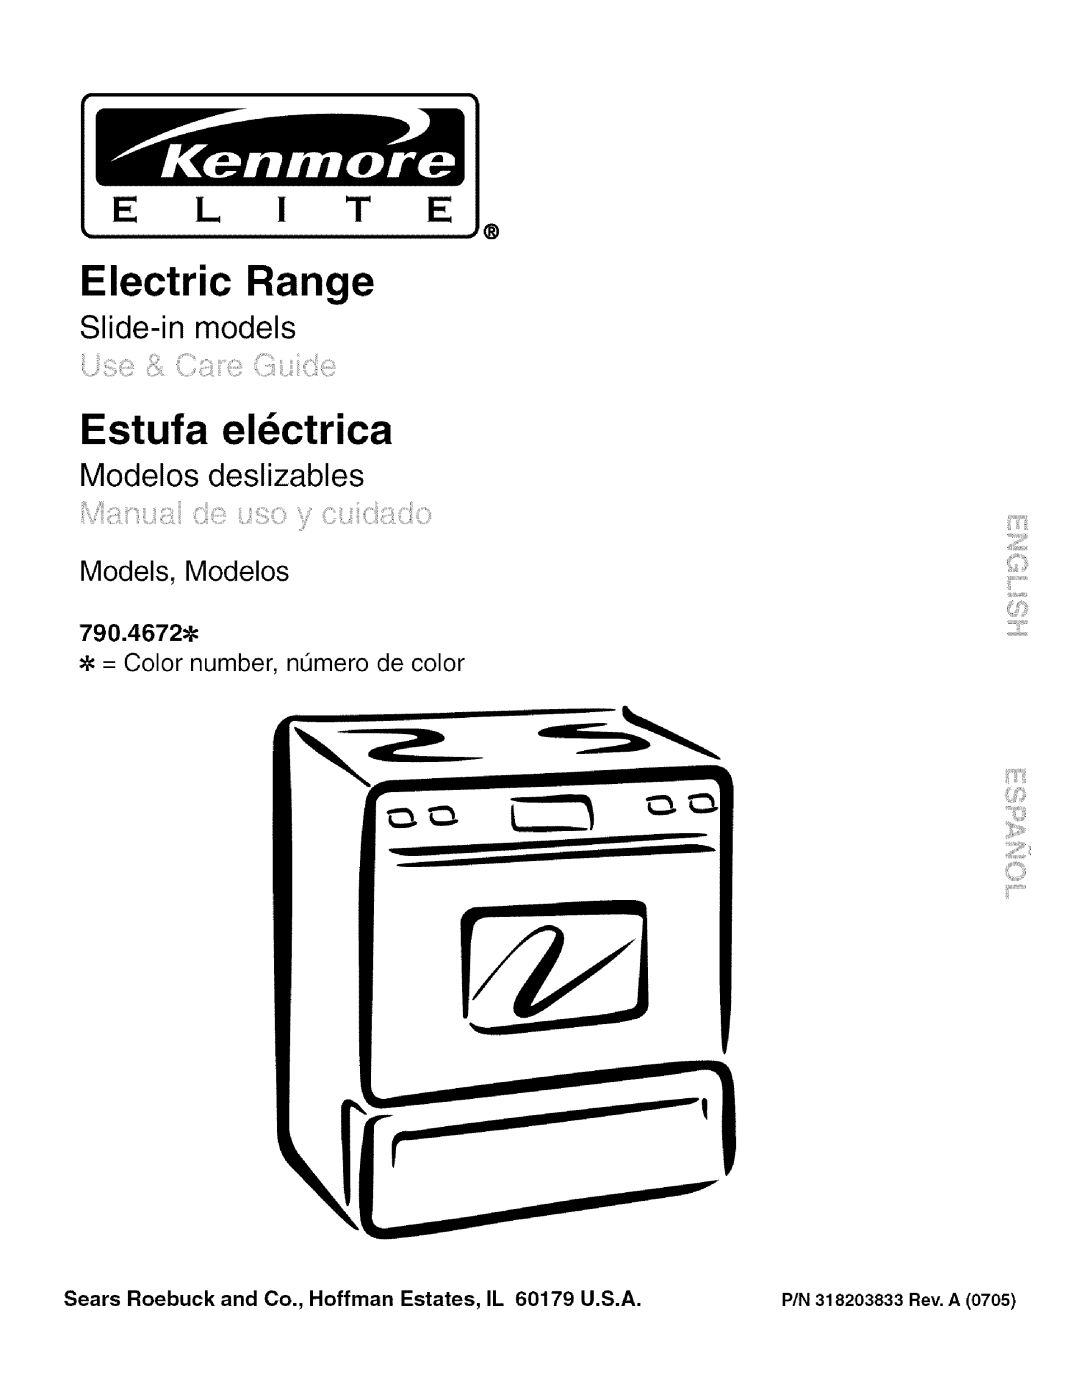 Kenmore manual Electric Range, Estufa el6ctrica, E !E, Models, Modelos, 790.4672#, Slide-inmodels, Modelos deslizables 